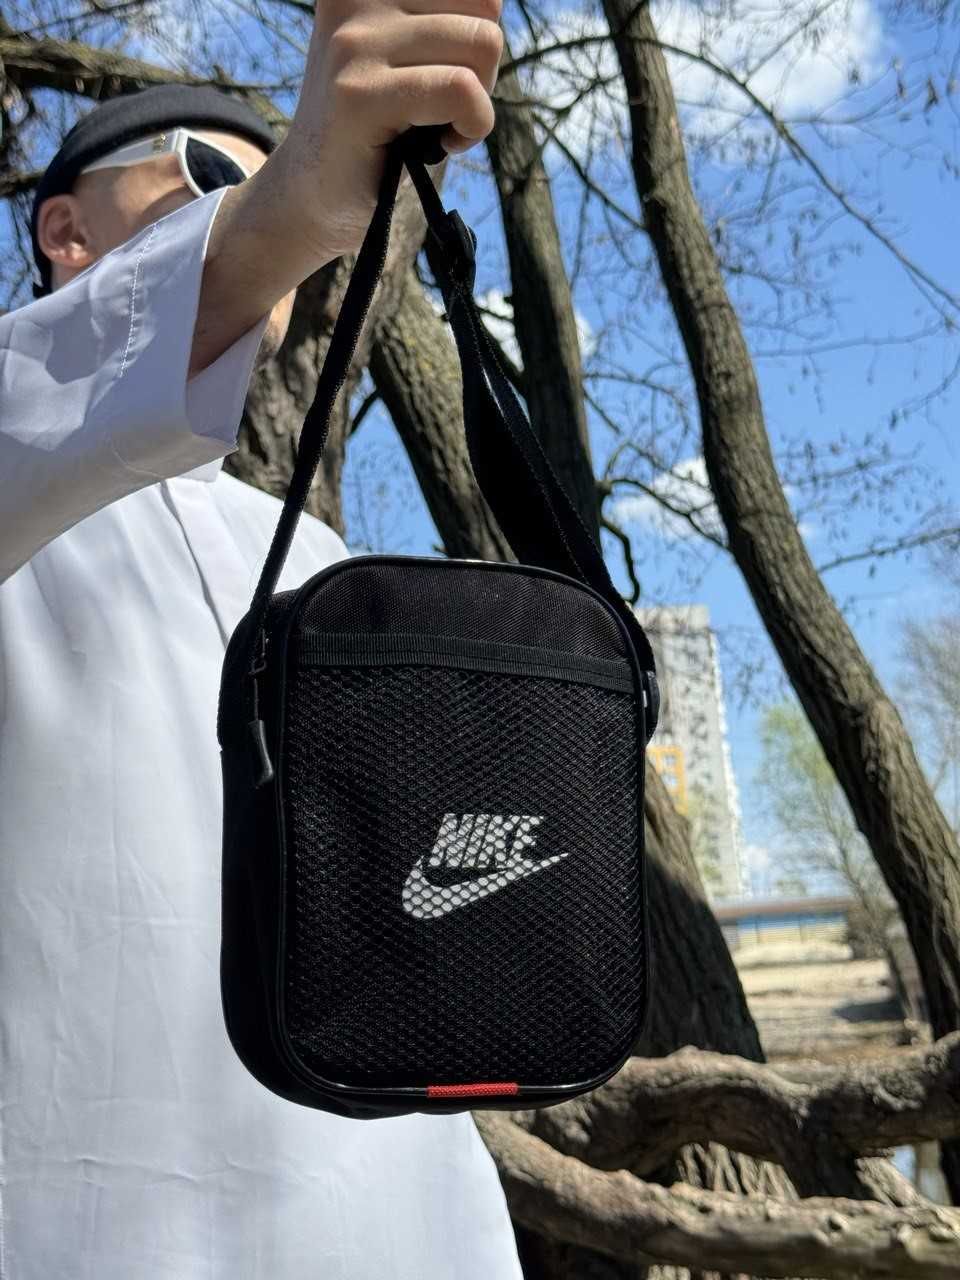 ОПТ 150 грн, Мужская, спортивная, барсетка, черная, сумка, Найк Nike